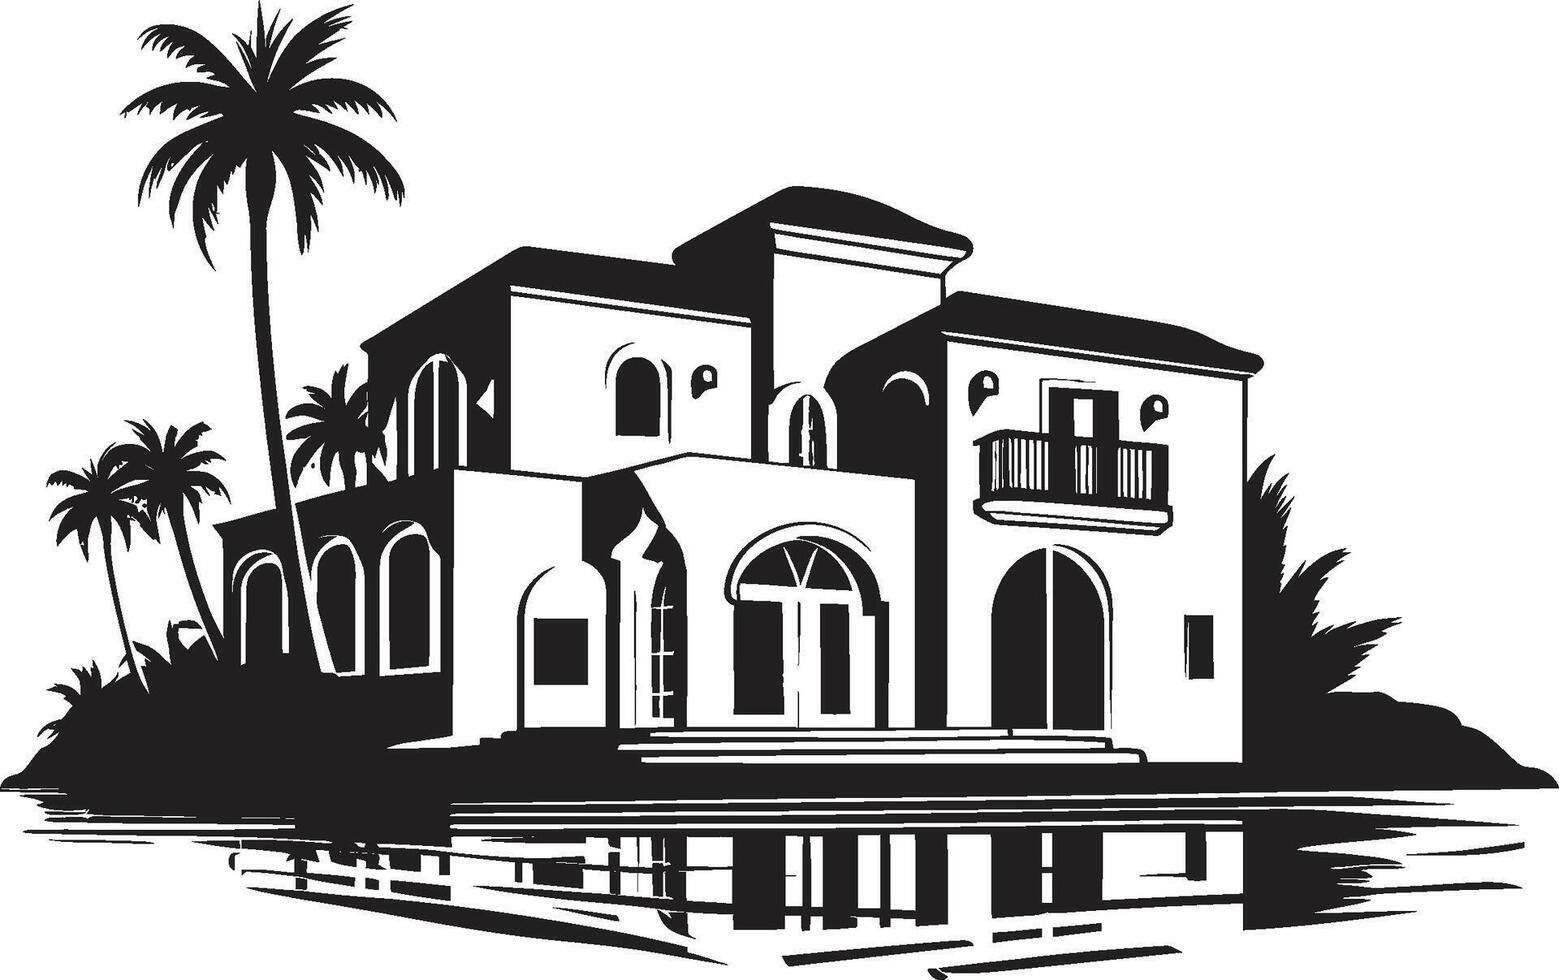 arquitectónico maravilla insignias moderno villa logo para exclusivo marca urbano oasis cresta pulcro moderno villa icono en elegante logo vector